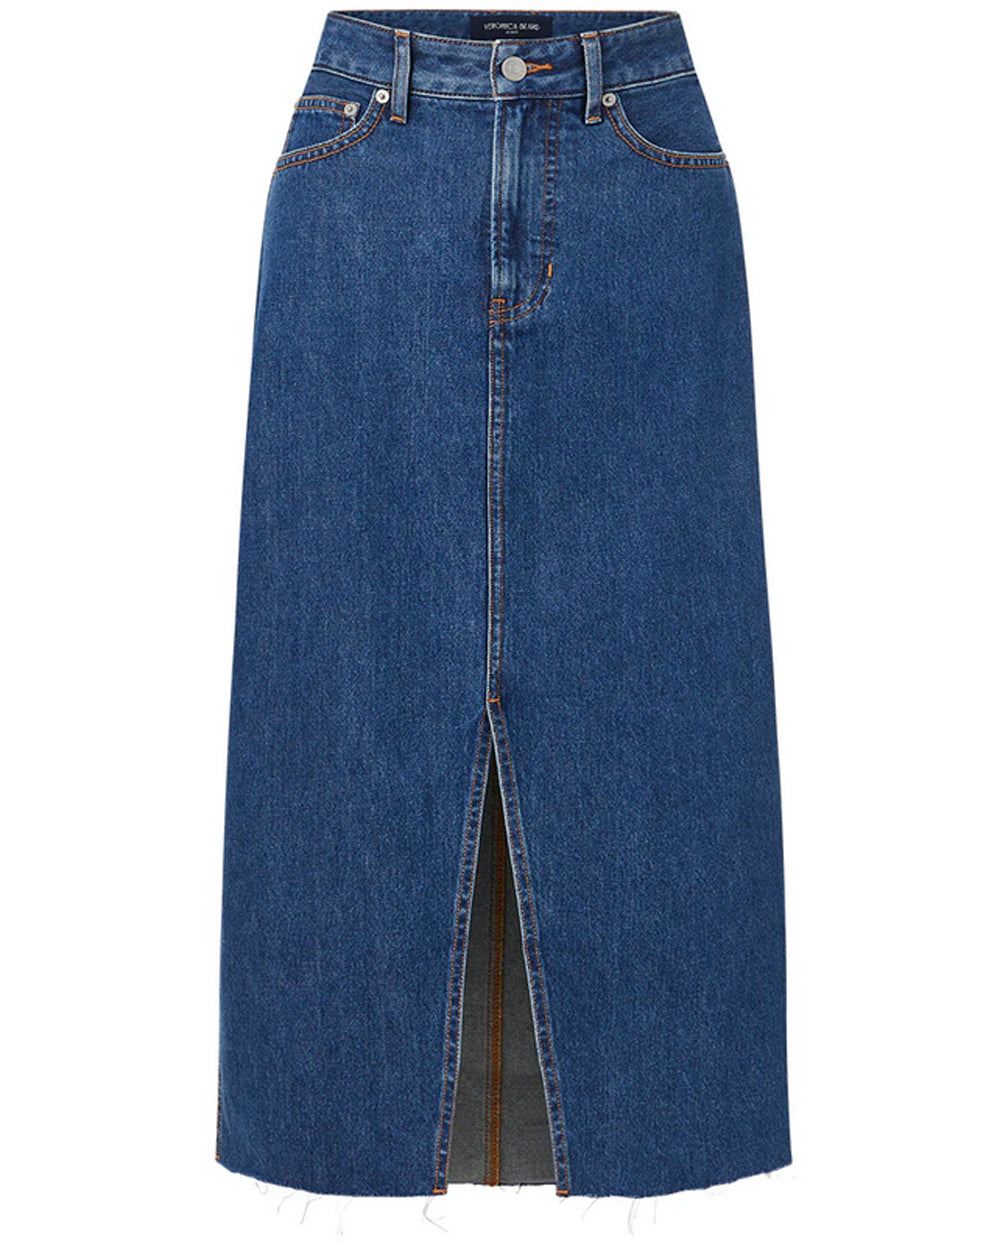 Victoria Midi Skirt in Stoned Blue